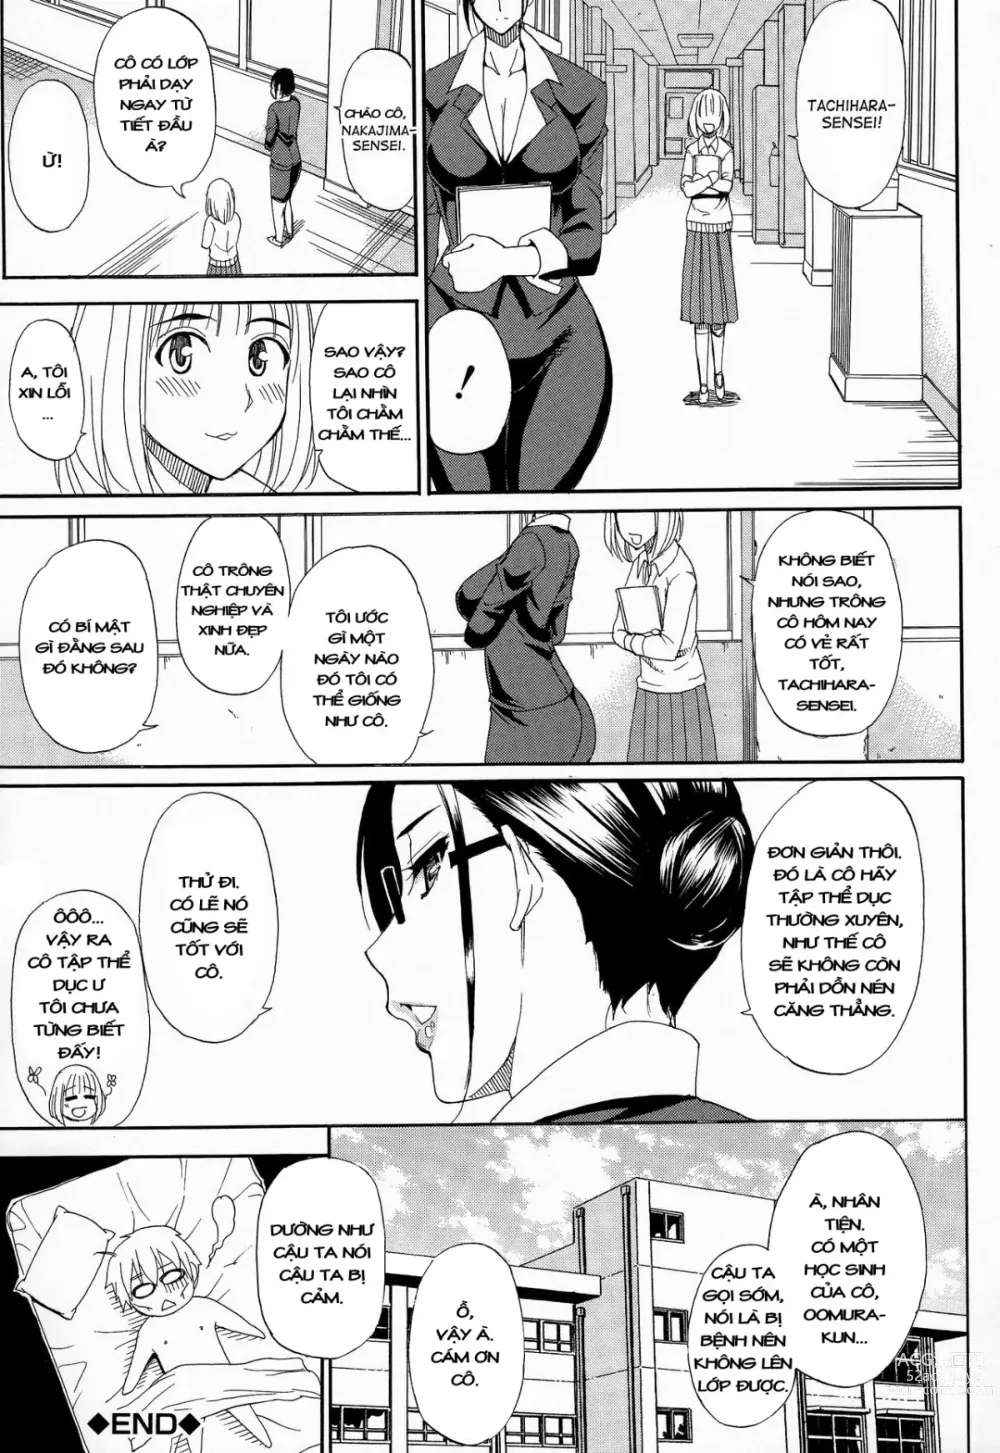 Page 36 of manga PETLIFE